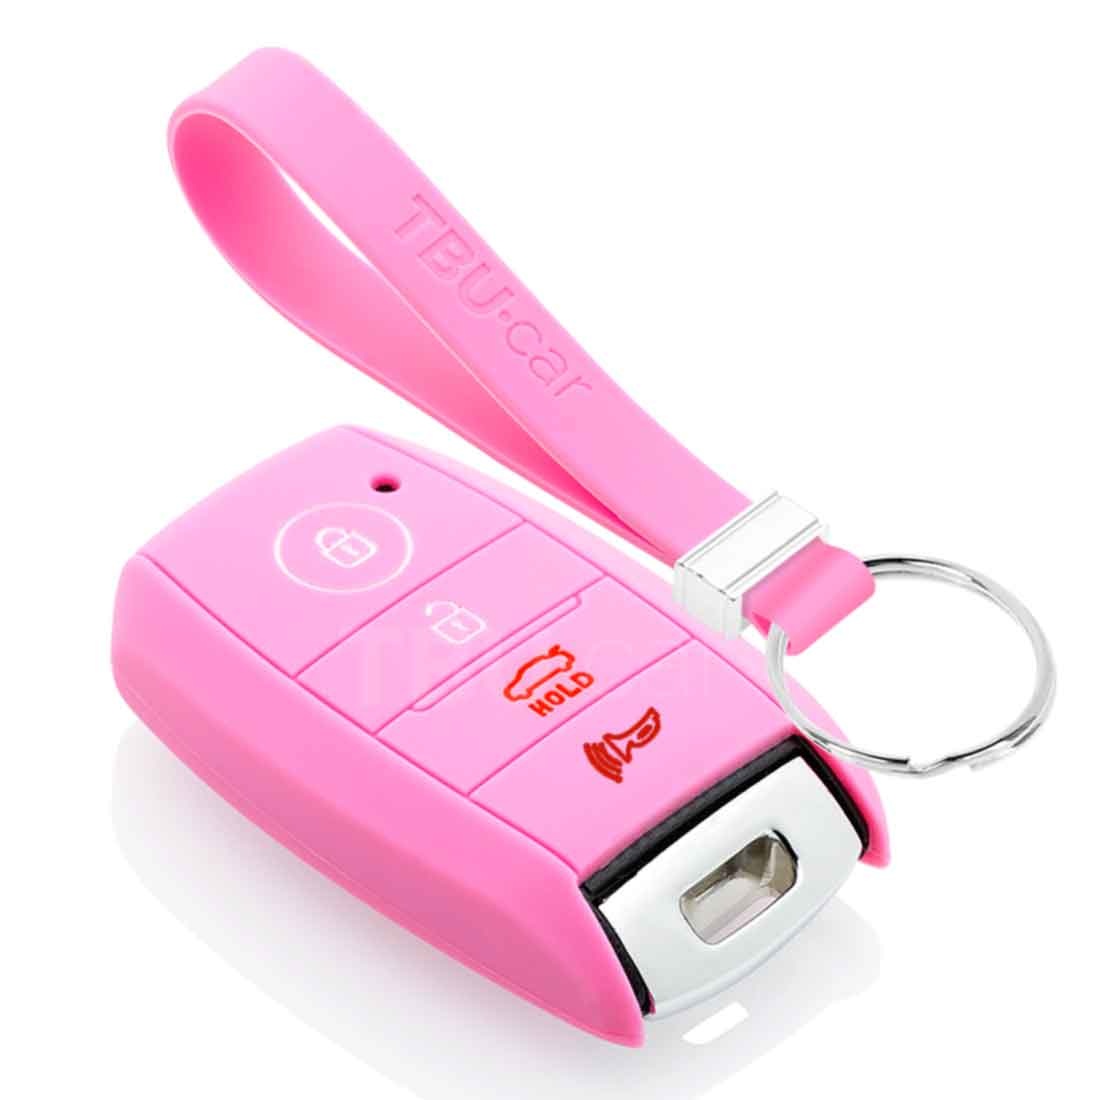 TBU car TBU car Sleutel cover compatibel met Hyundai - Silicone sleutelhoesje - beschermhoesje autosleutel - Roze